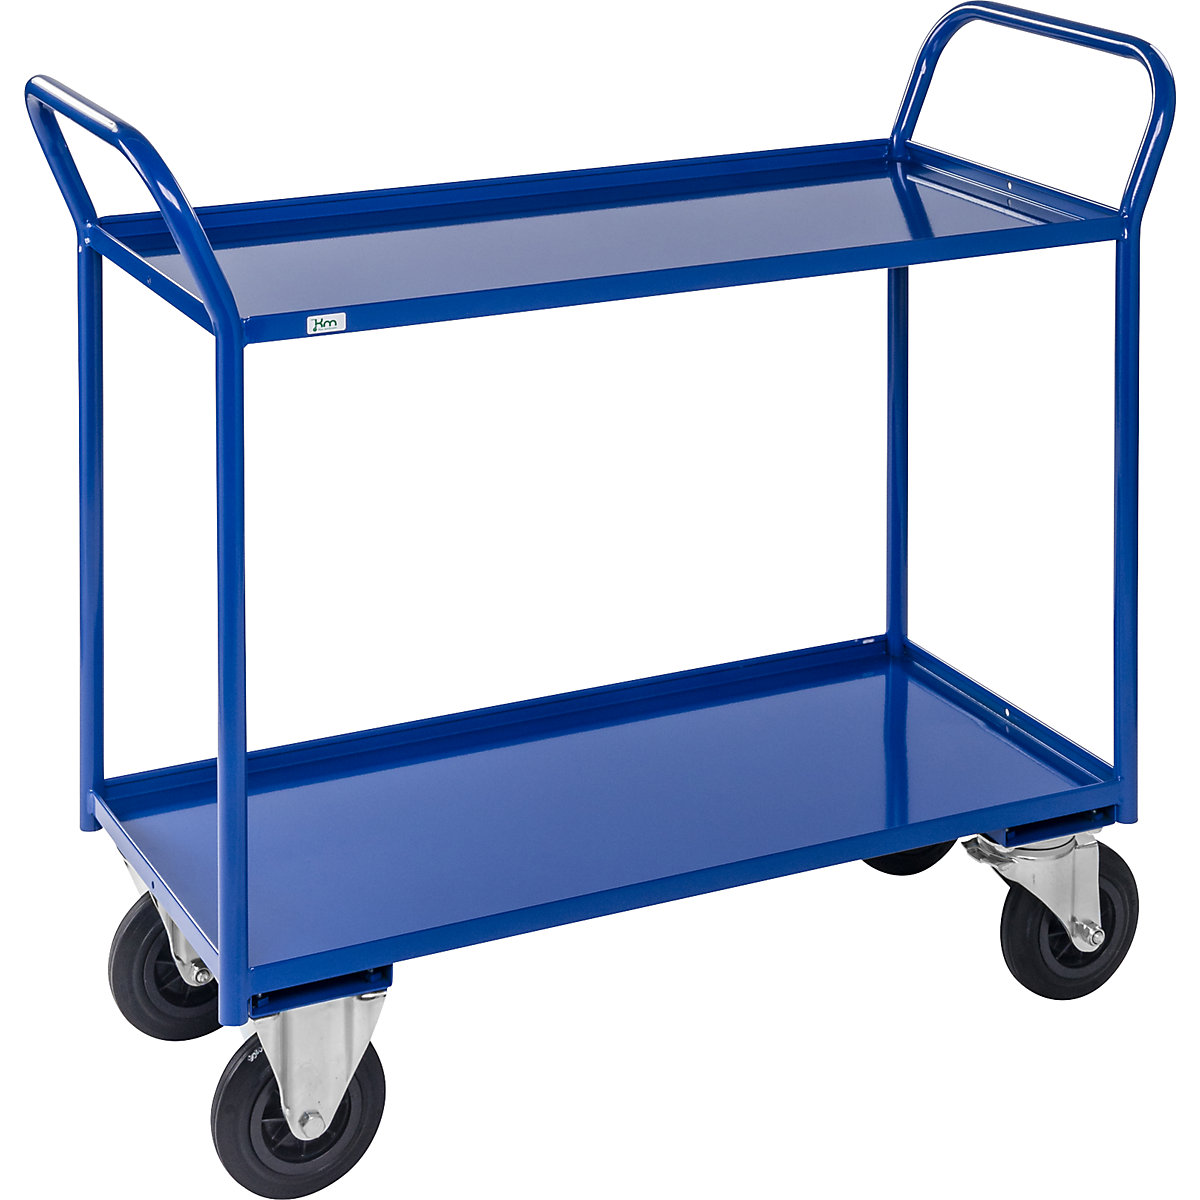 KM41 table trolley – Kongamek, 2 shelves with raised edges, LxWxH 1070 x 550 x 1000 mm, blue, 2 swivel castors and 2 fixed castors, 5+ items-3